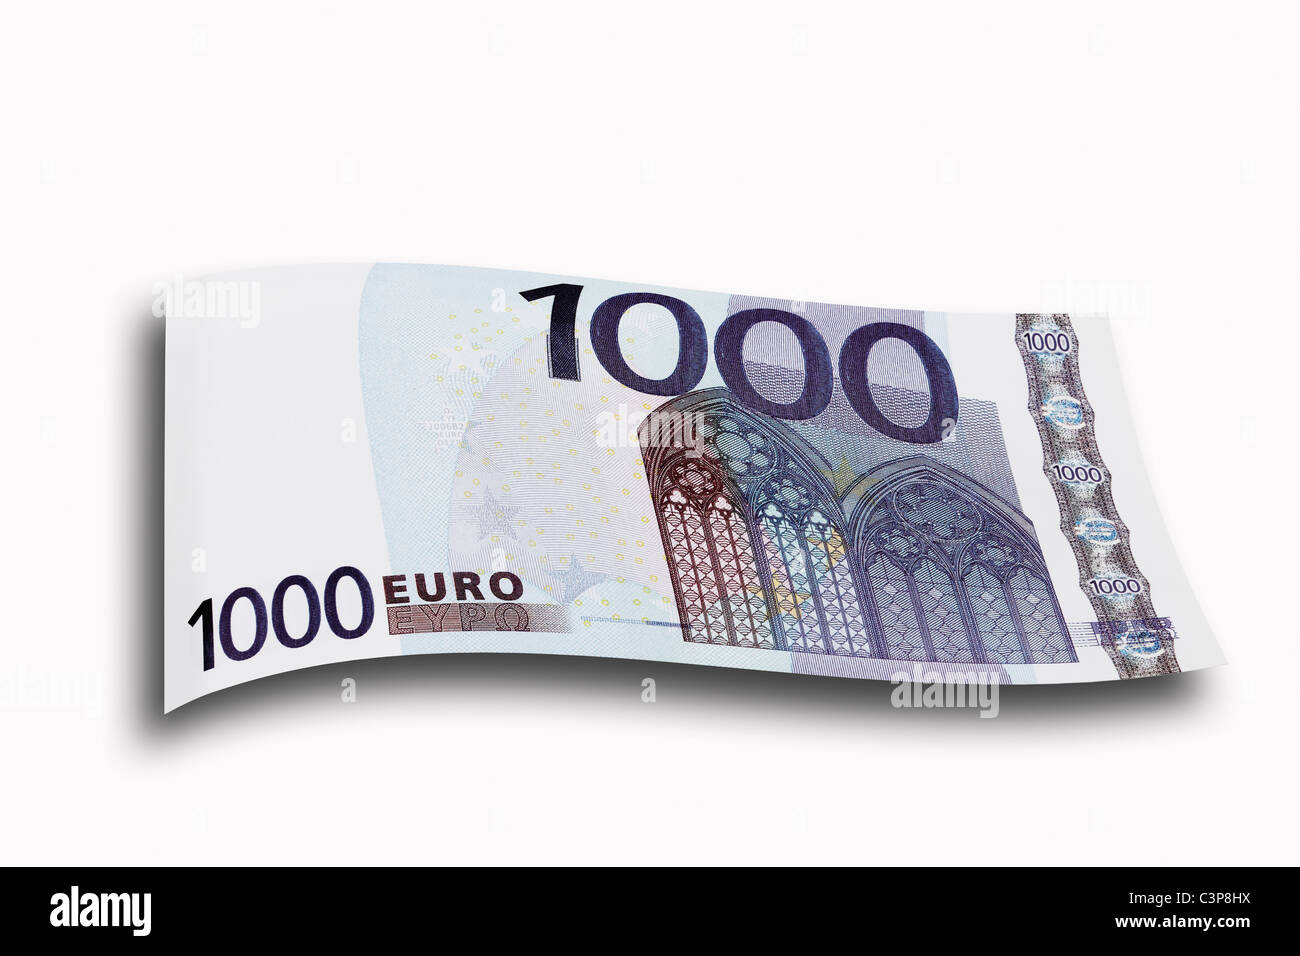 1000 Euro note on white background, close-up Stock Photo